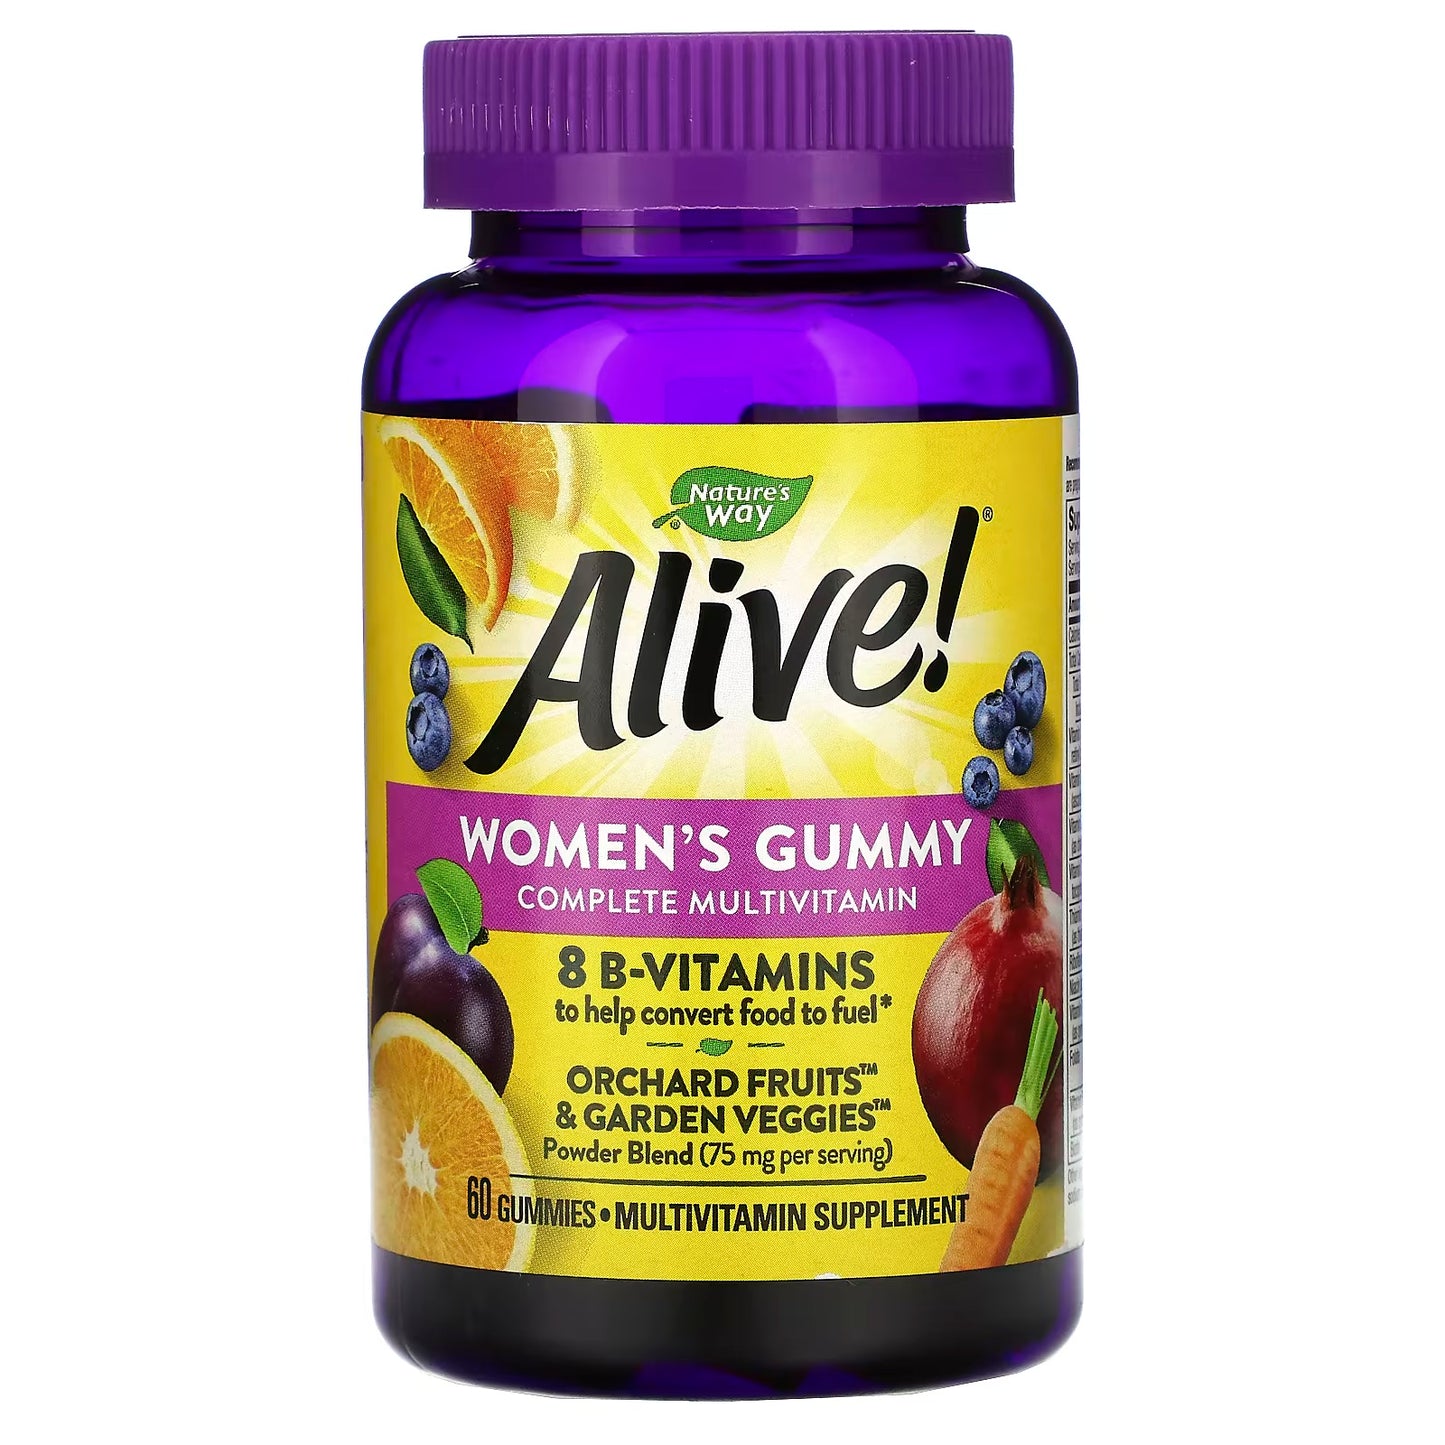 Alive! Women's Gummy Complete Multivitamin, Mixed Berry Flavor, 60 Gummies